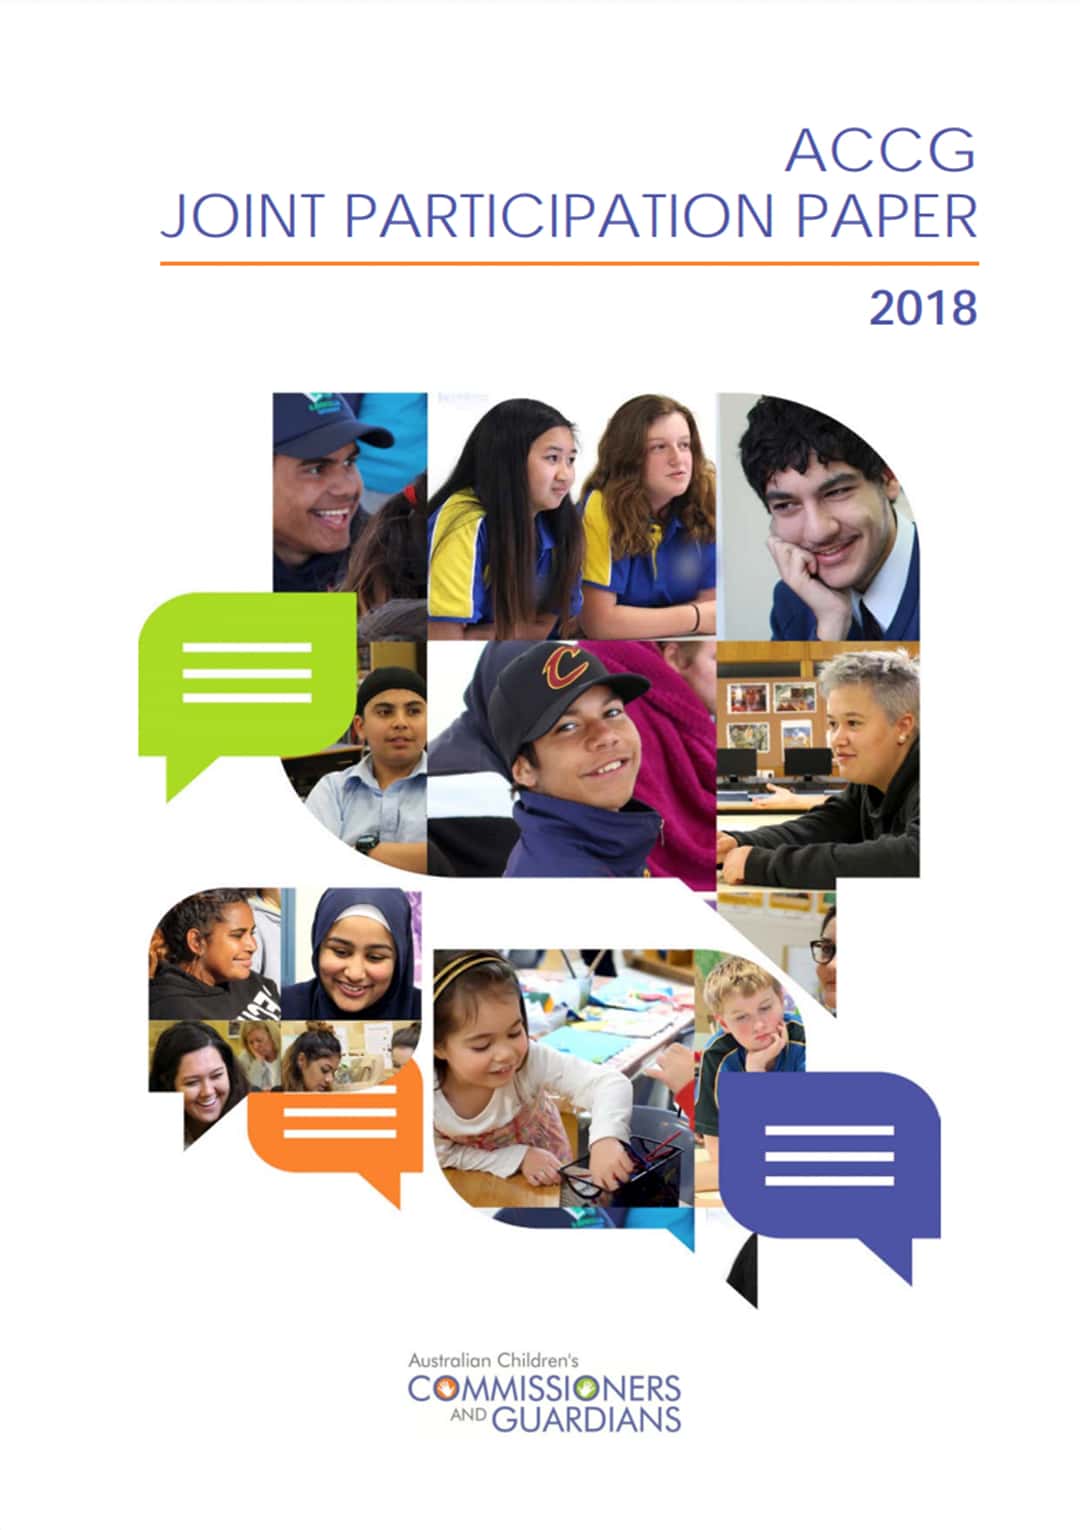 ACCG Joint Participation Paper 2018